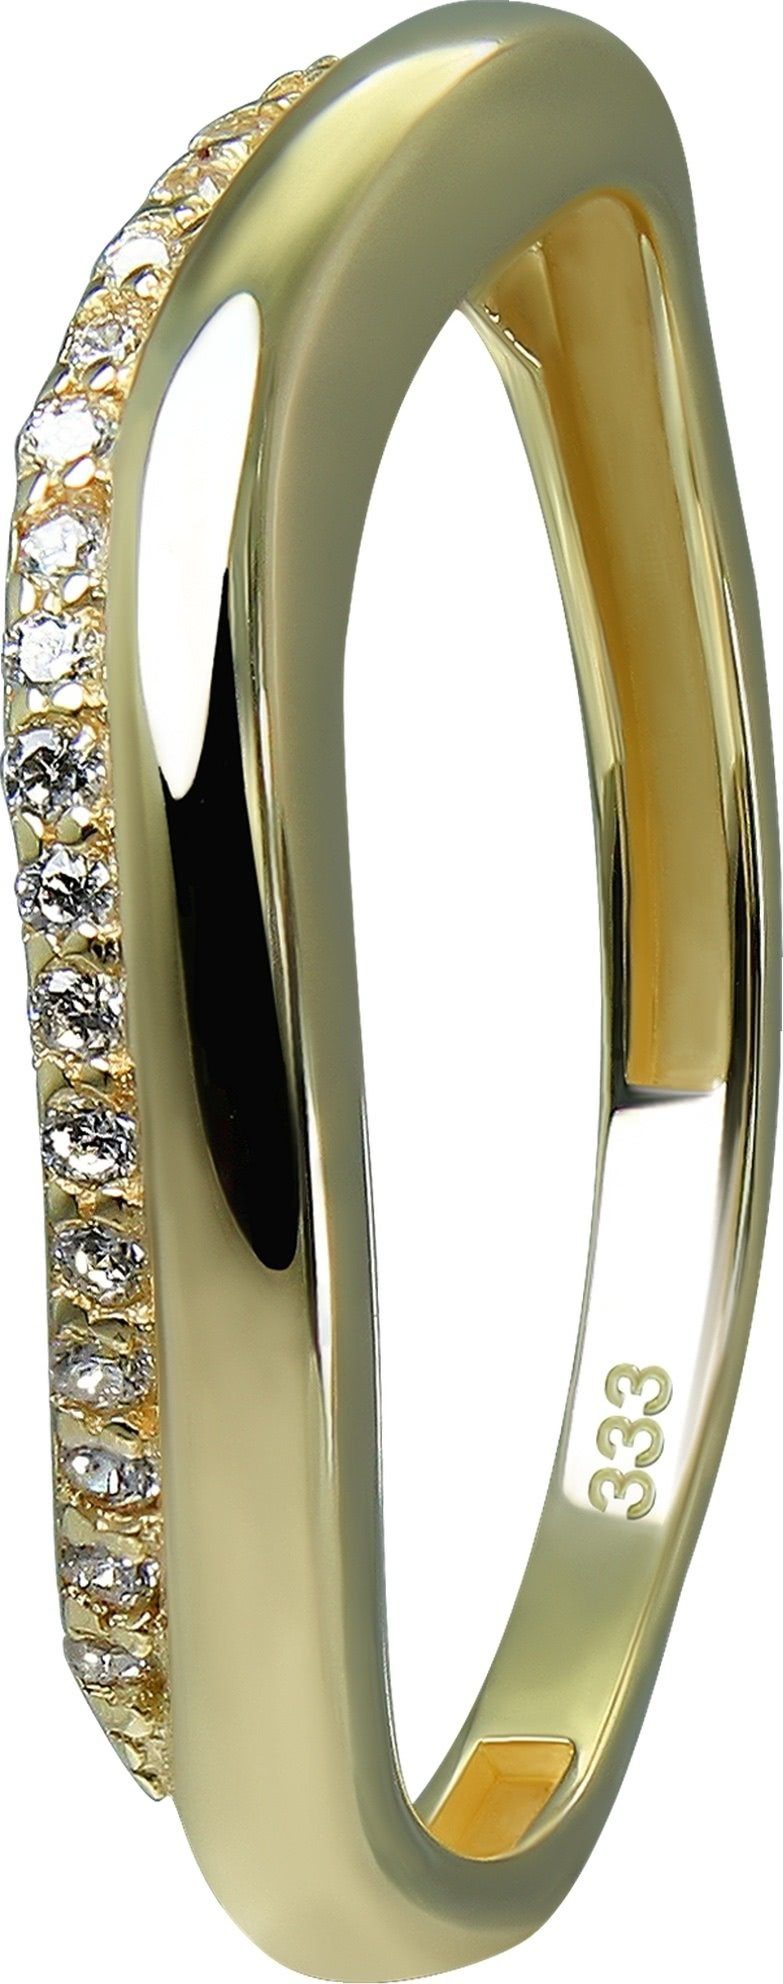 (Fingerring), - Farbe: Gold Zirkonia GoldDream weiß 333 Welle Goldring Ring Gr.58 8 Welle Gelbgold Karat, gold, Ring GoldDream Damen